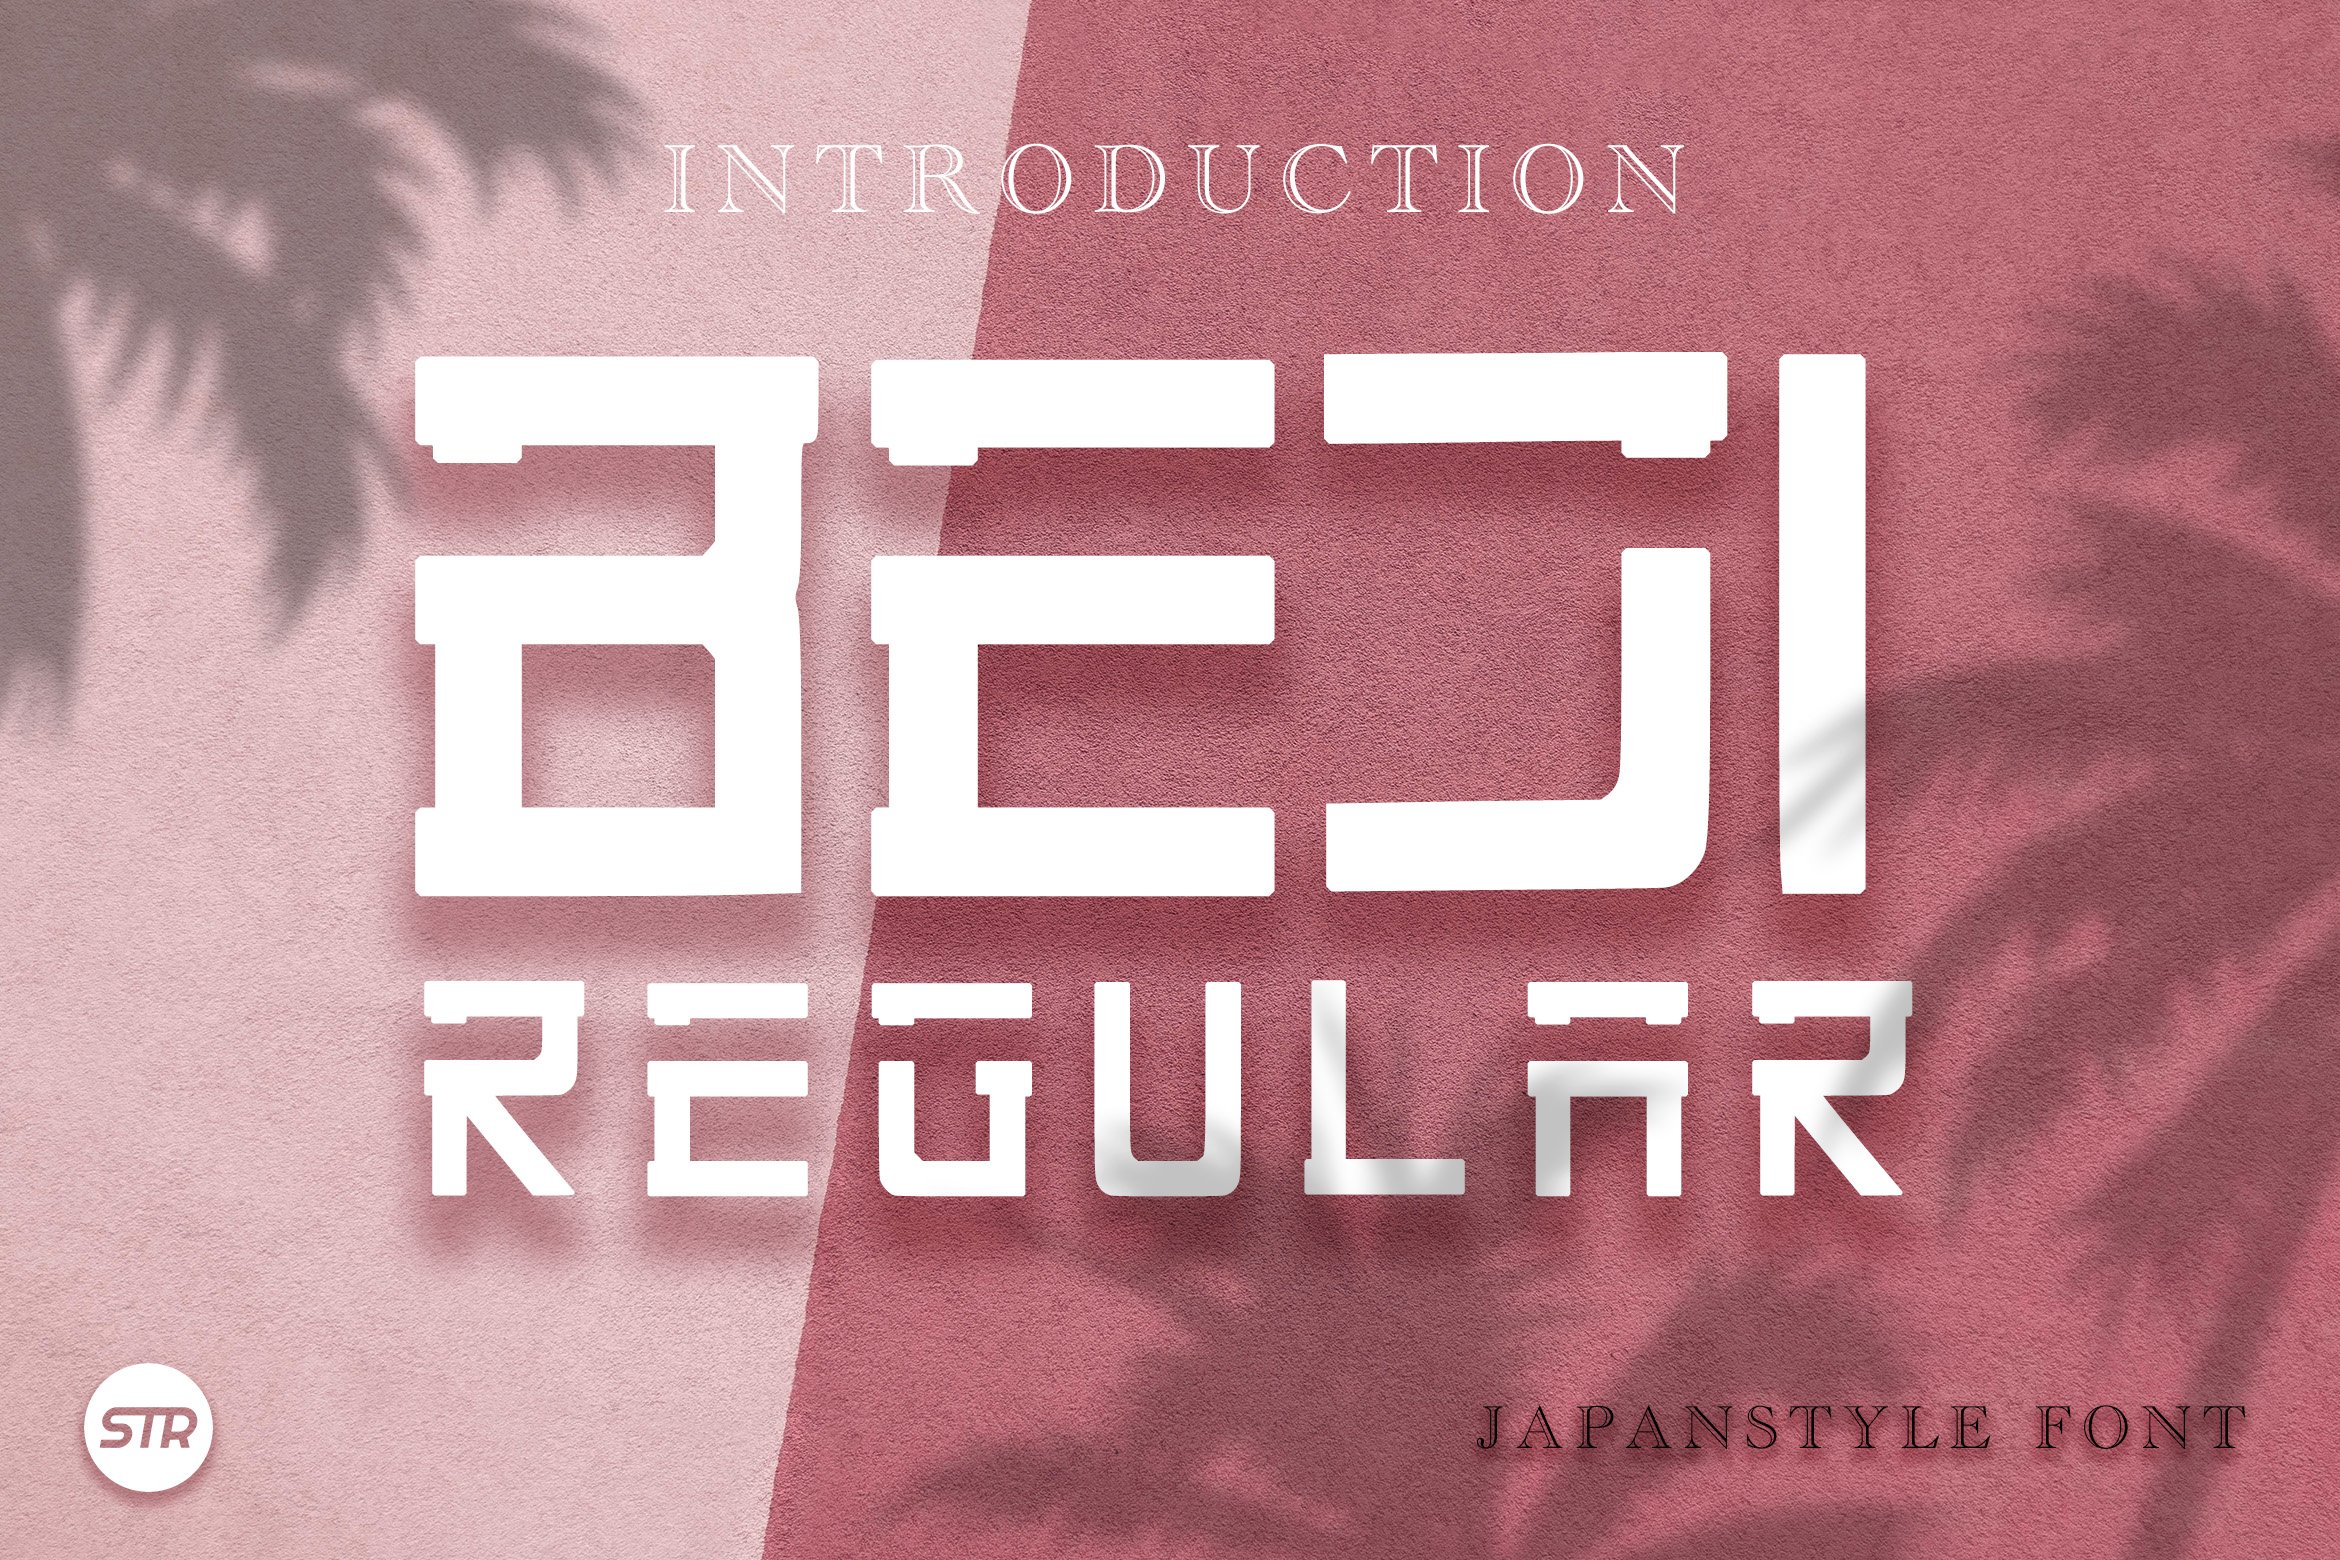 Beji Regular - Japan Style Font cover image.